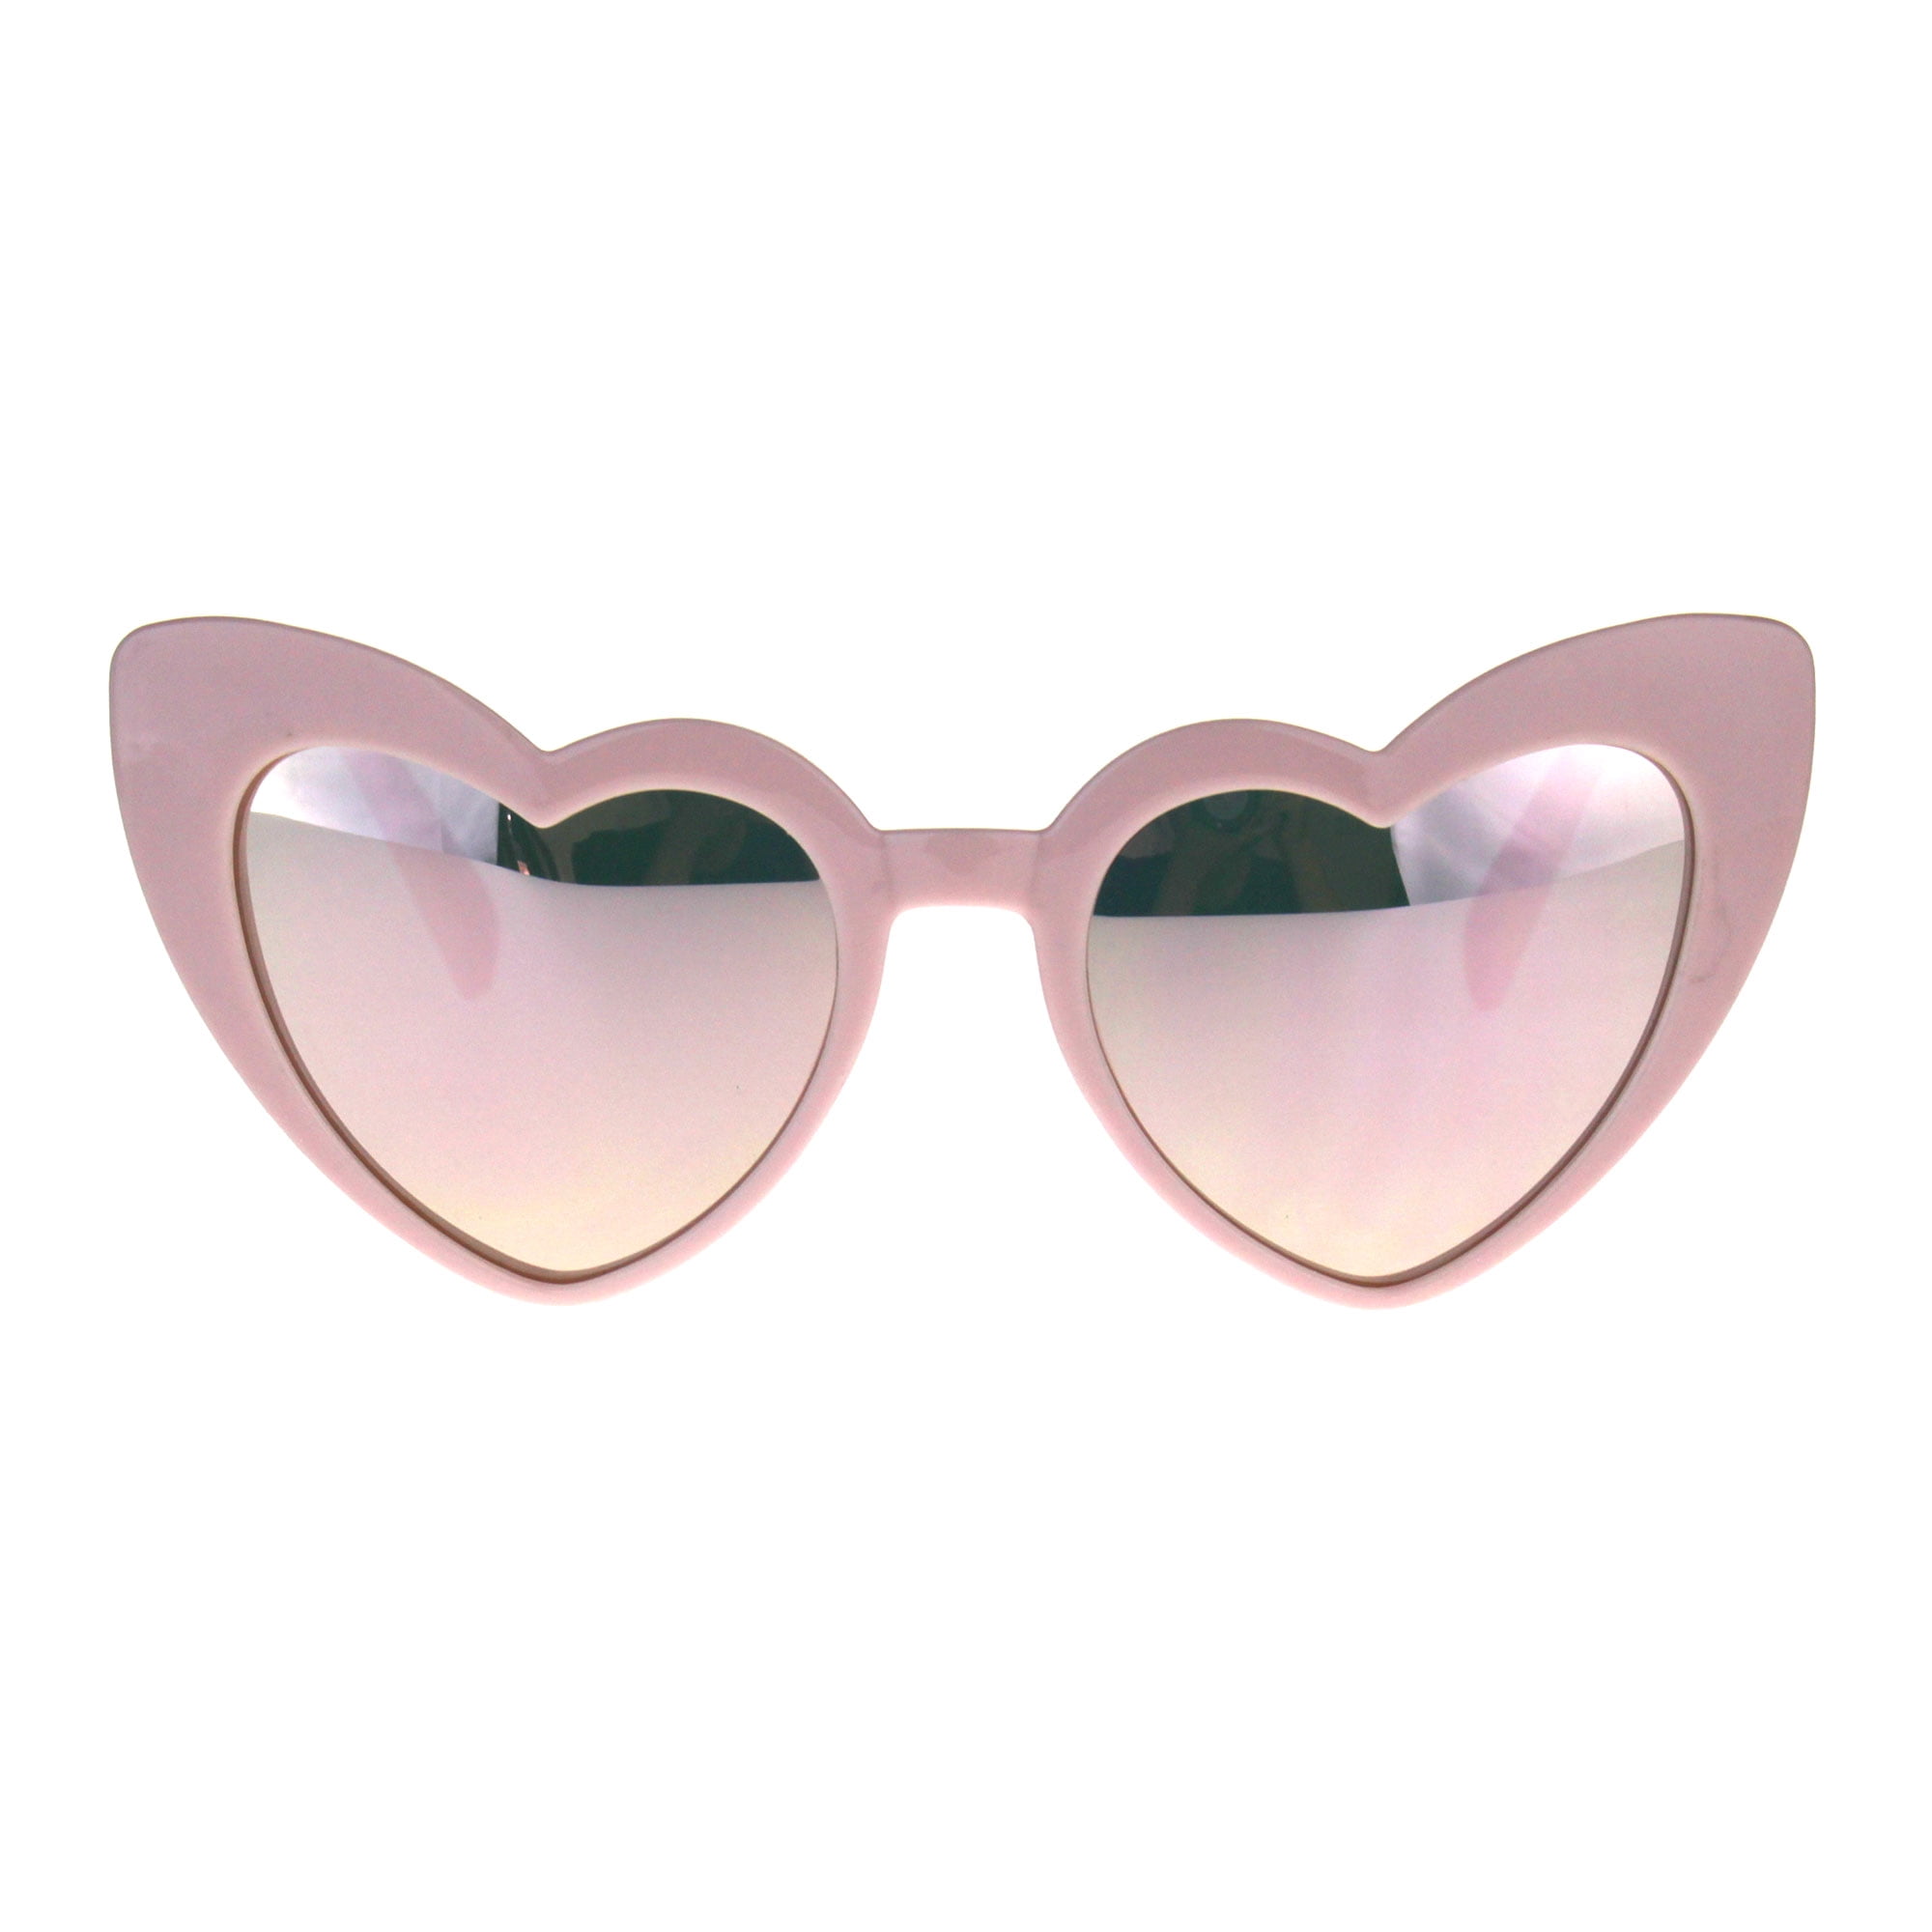 SA106 Runway Trend Mirror Lace Visor Cat Eye Retro Fashion Sunglasses Green Marble Fuchsia, Women's, Size: One Size